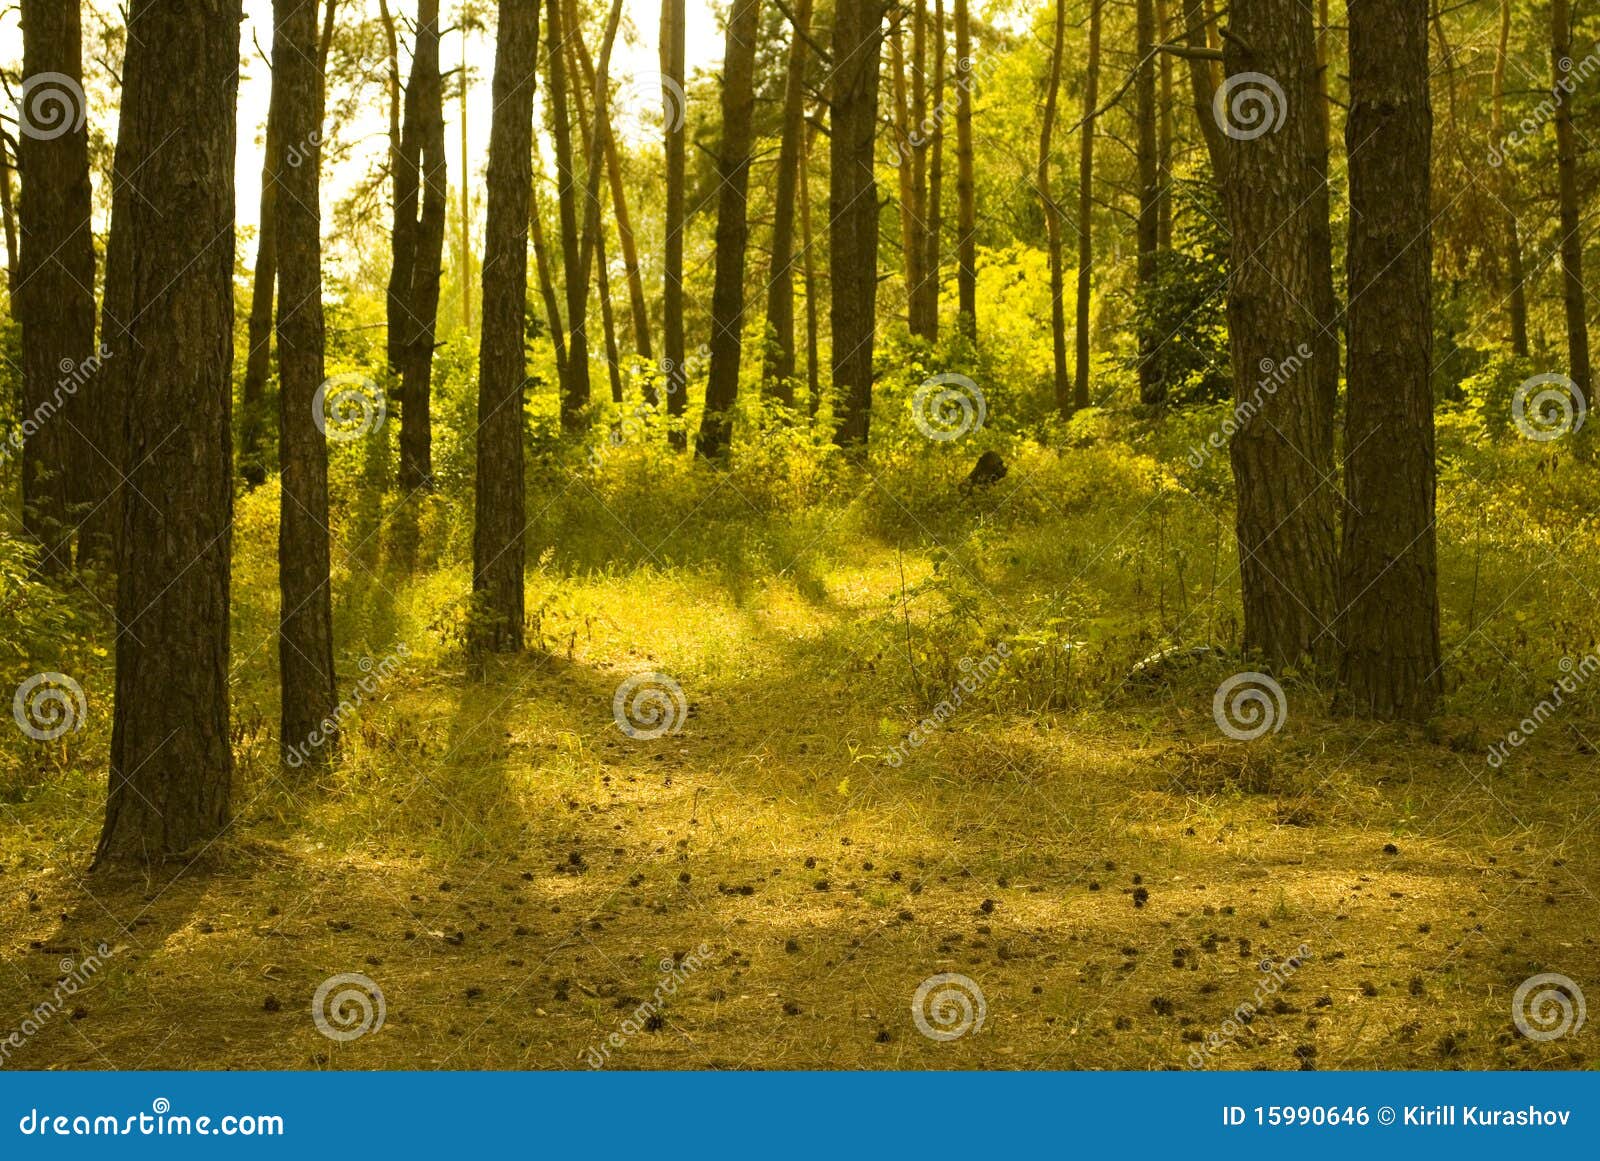 sunlit pine forest